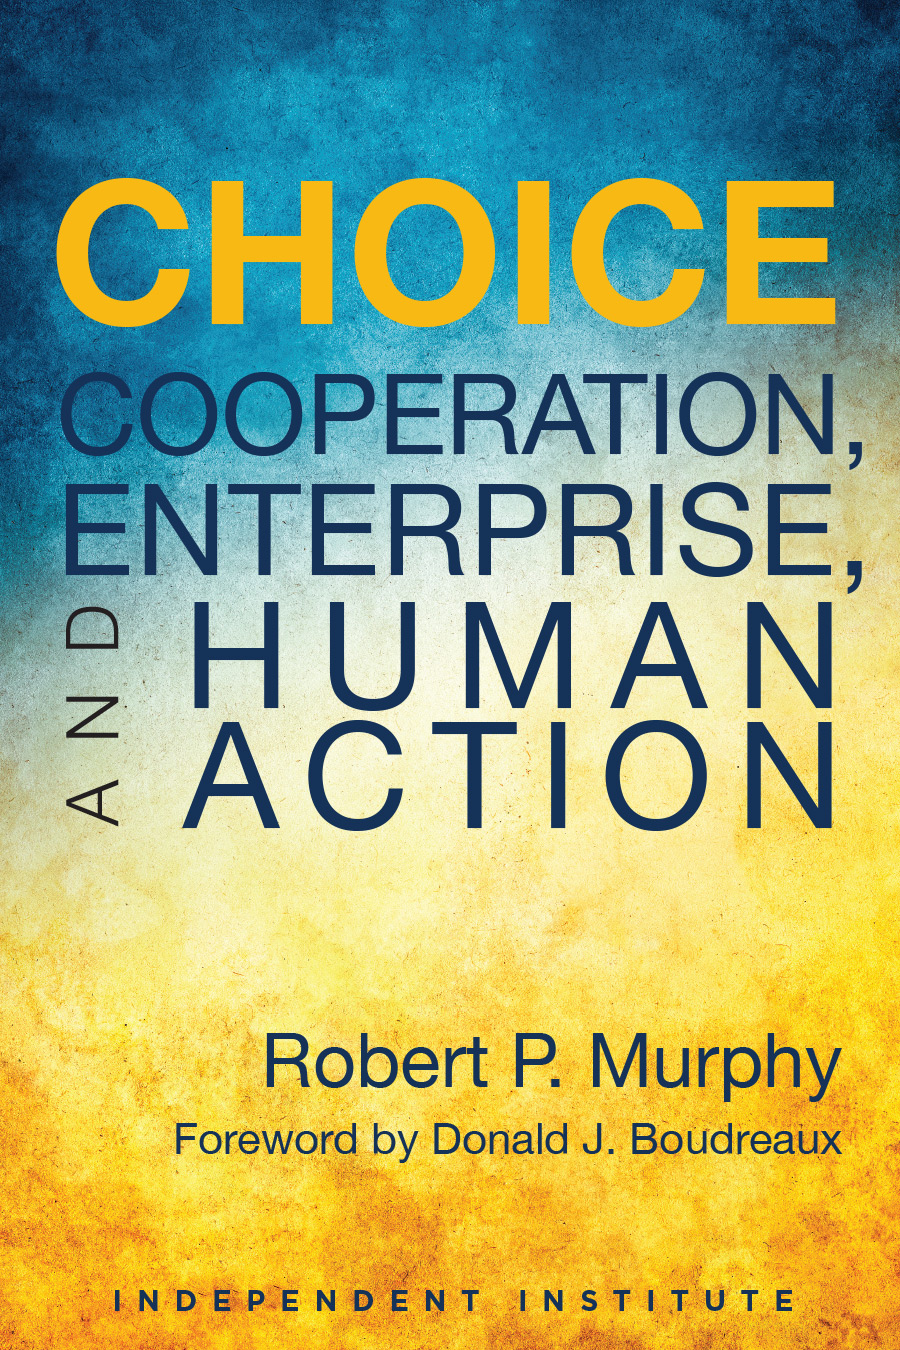 Human Actions book. Robert b Murphy.